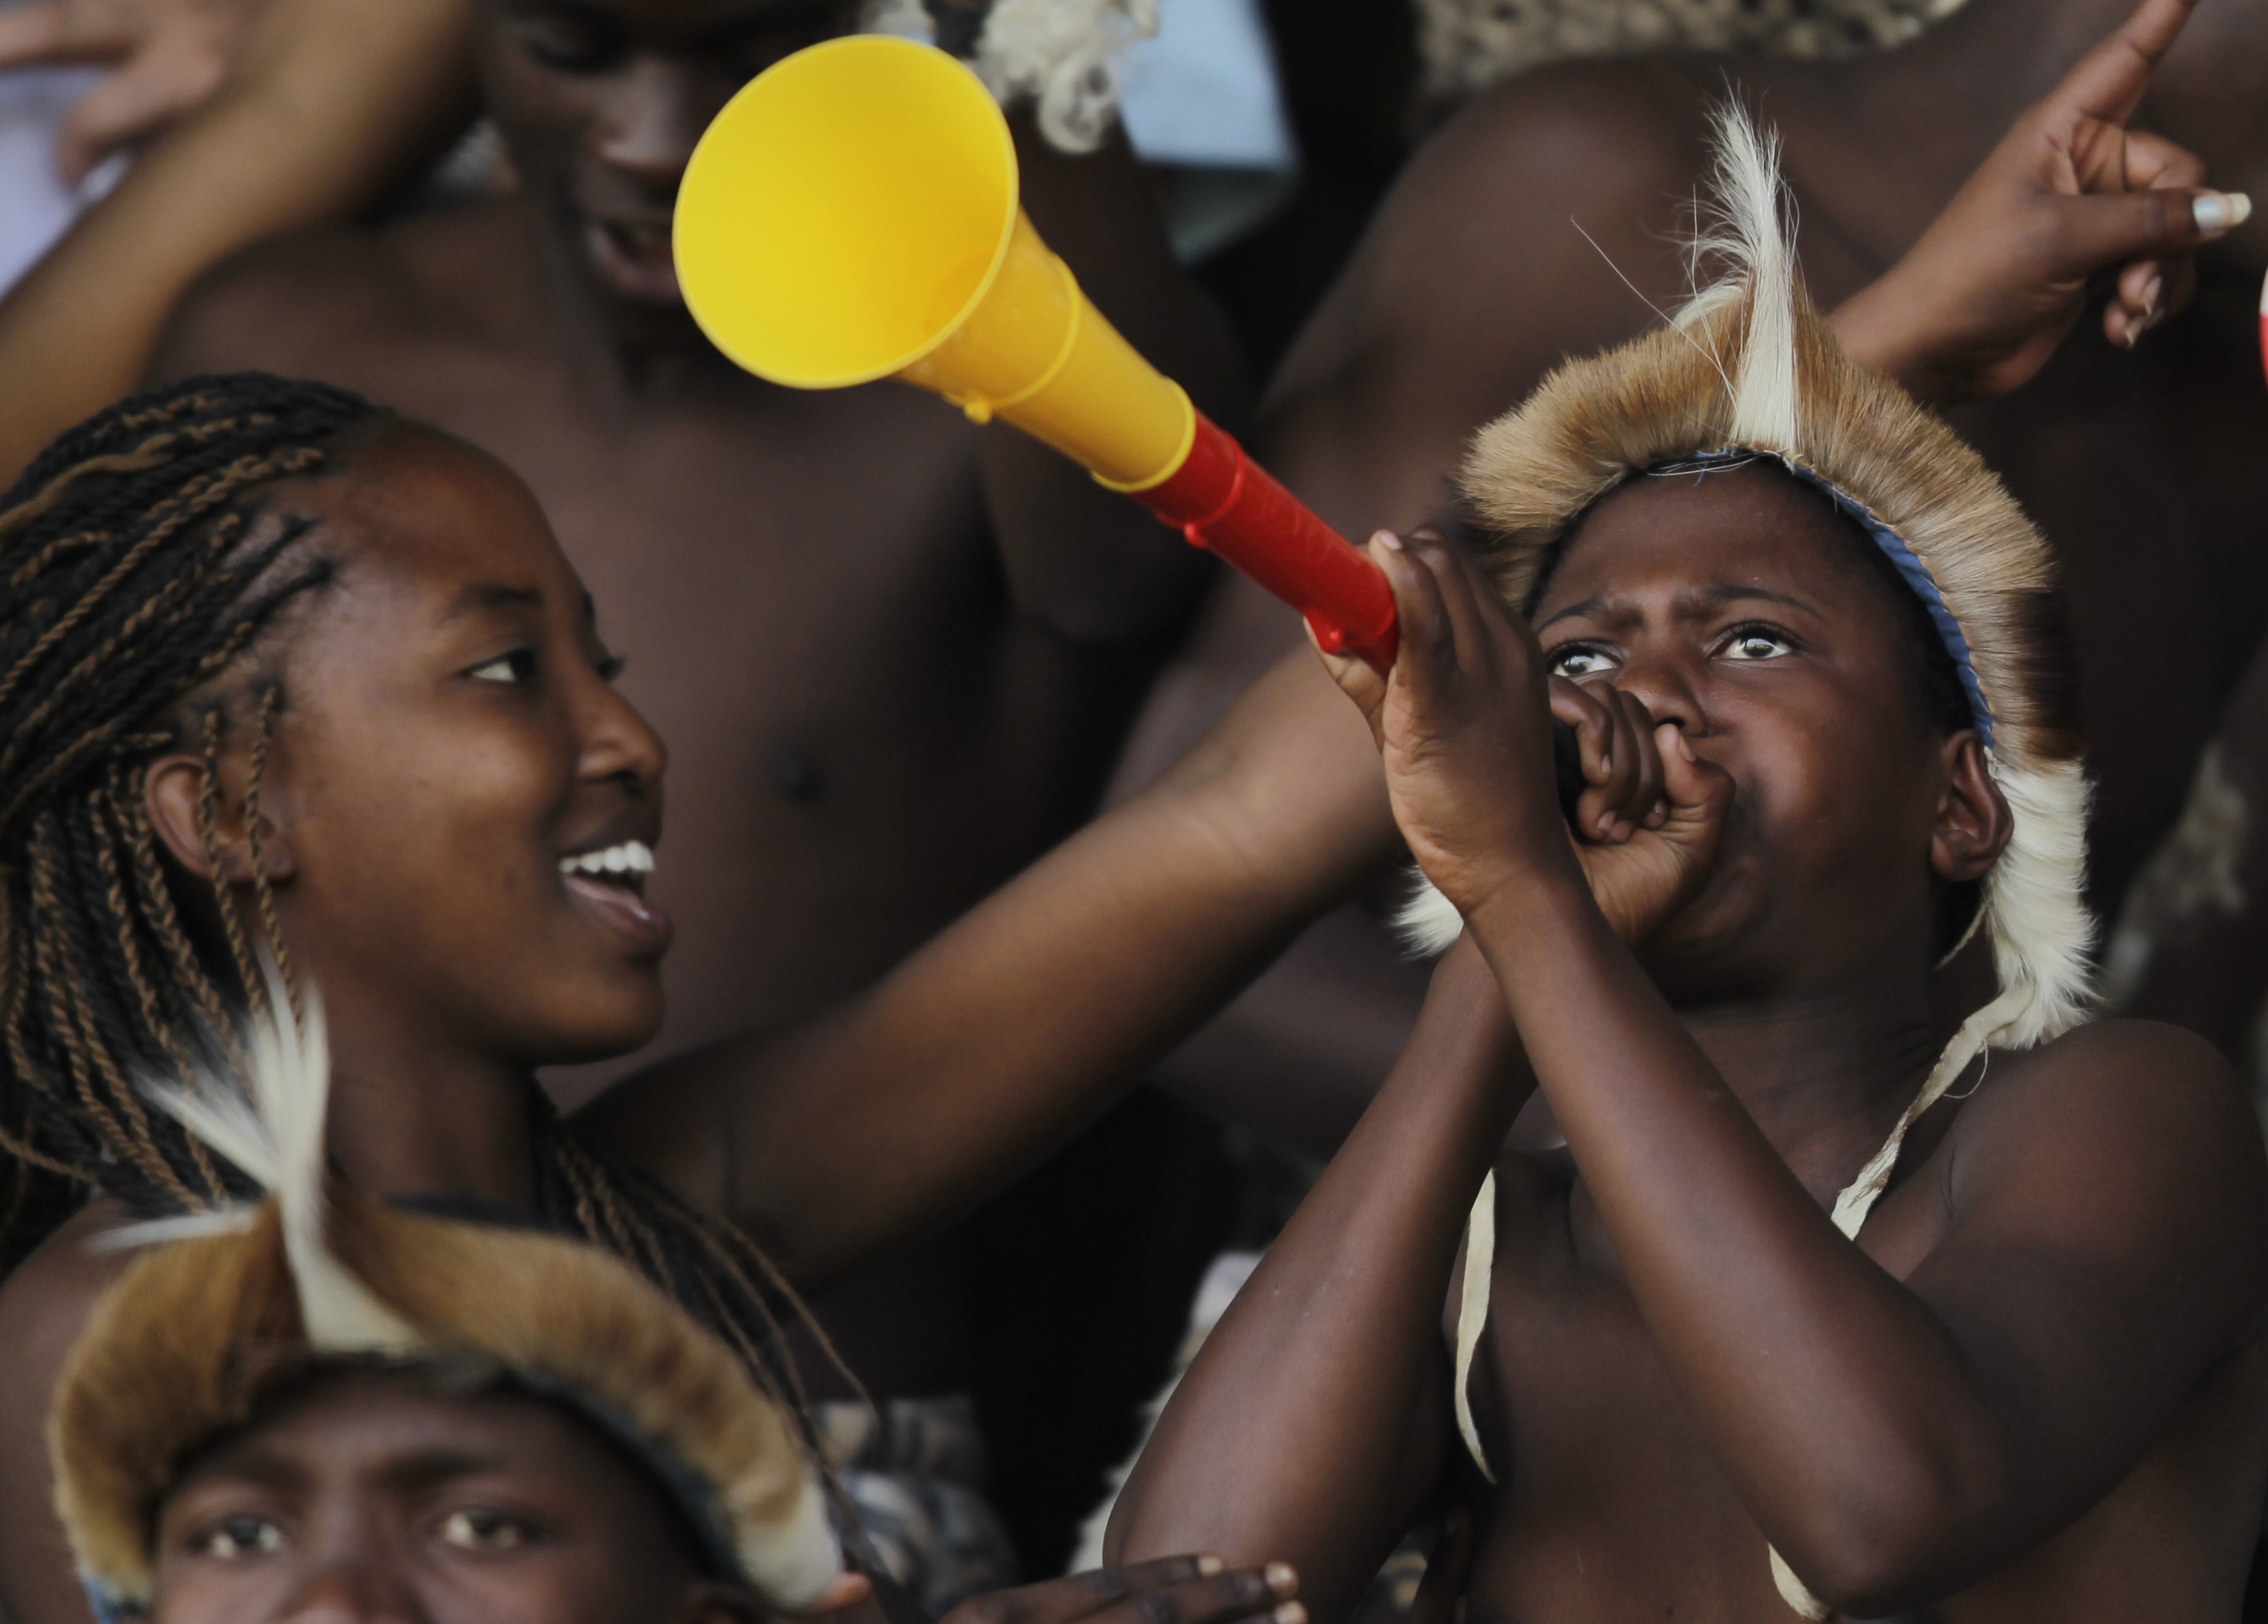 Vuvuzelan - älskad i Sydafrika, hatad utanför Afrika. 